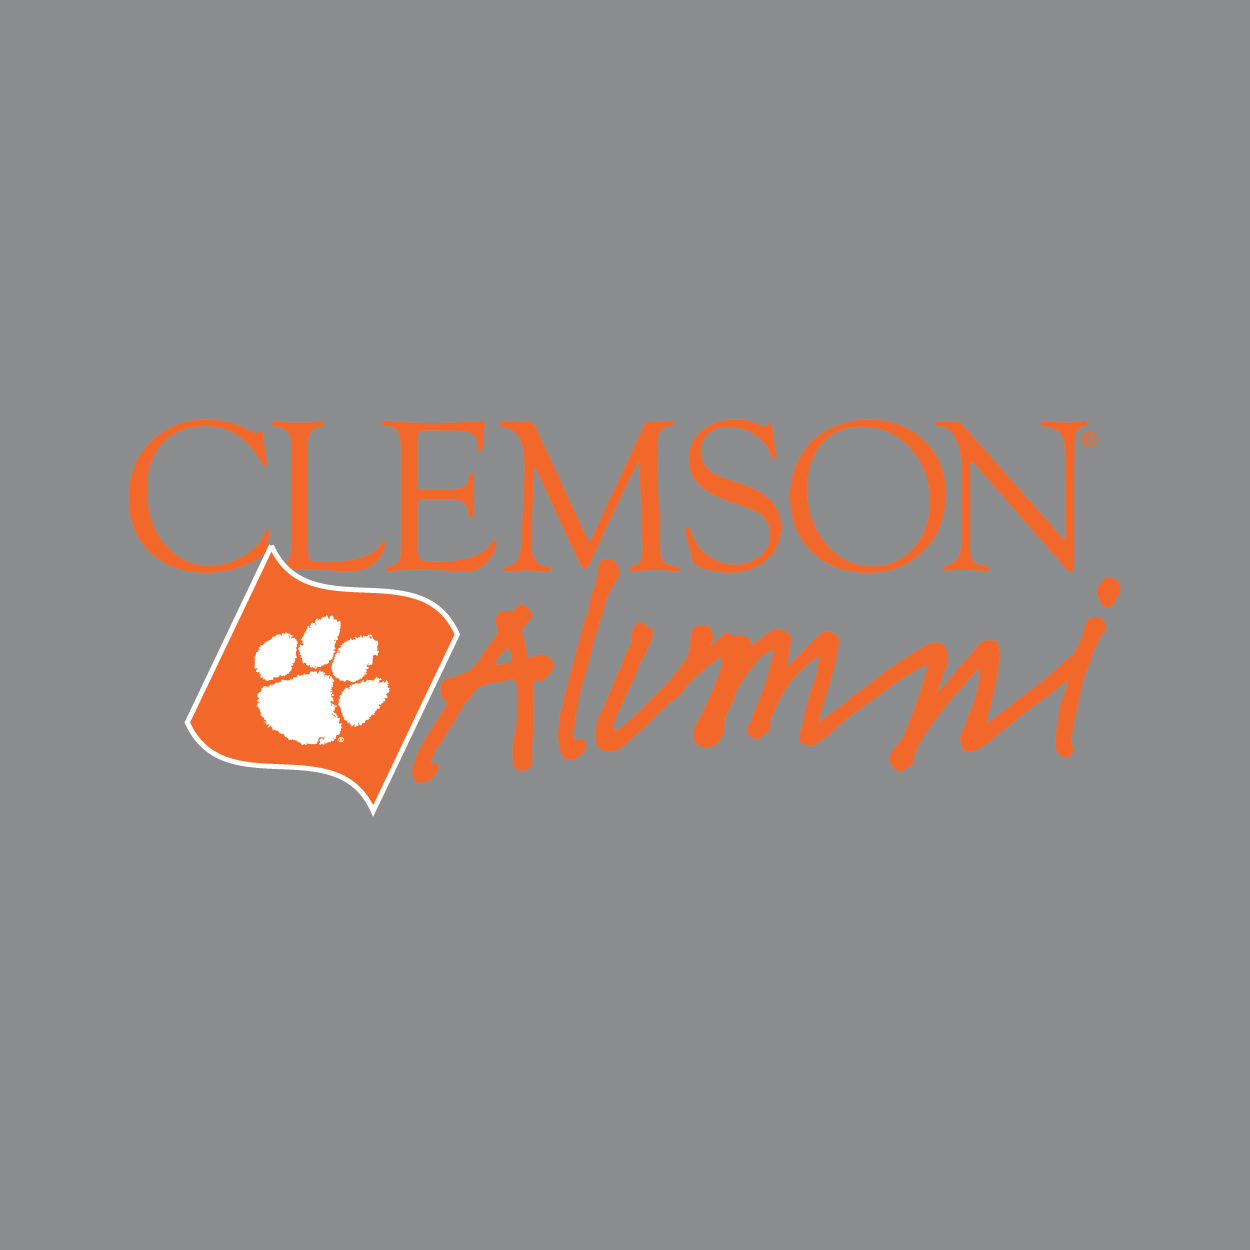 Alumni Logo - Clemson Alumni Logo Decal